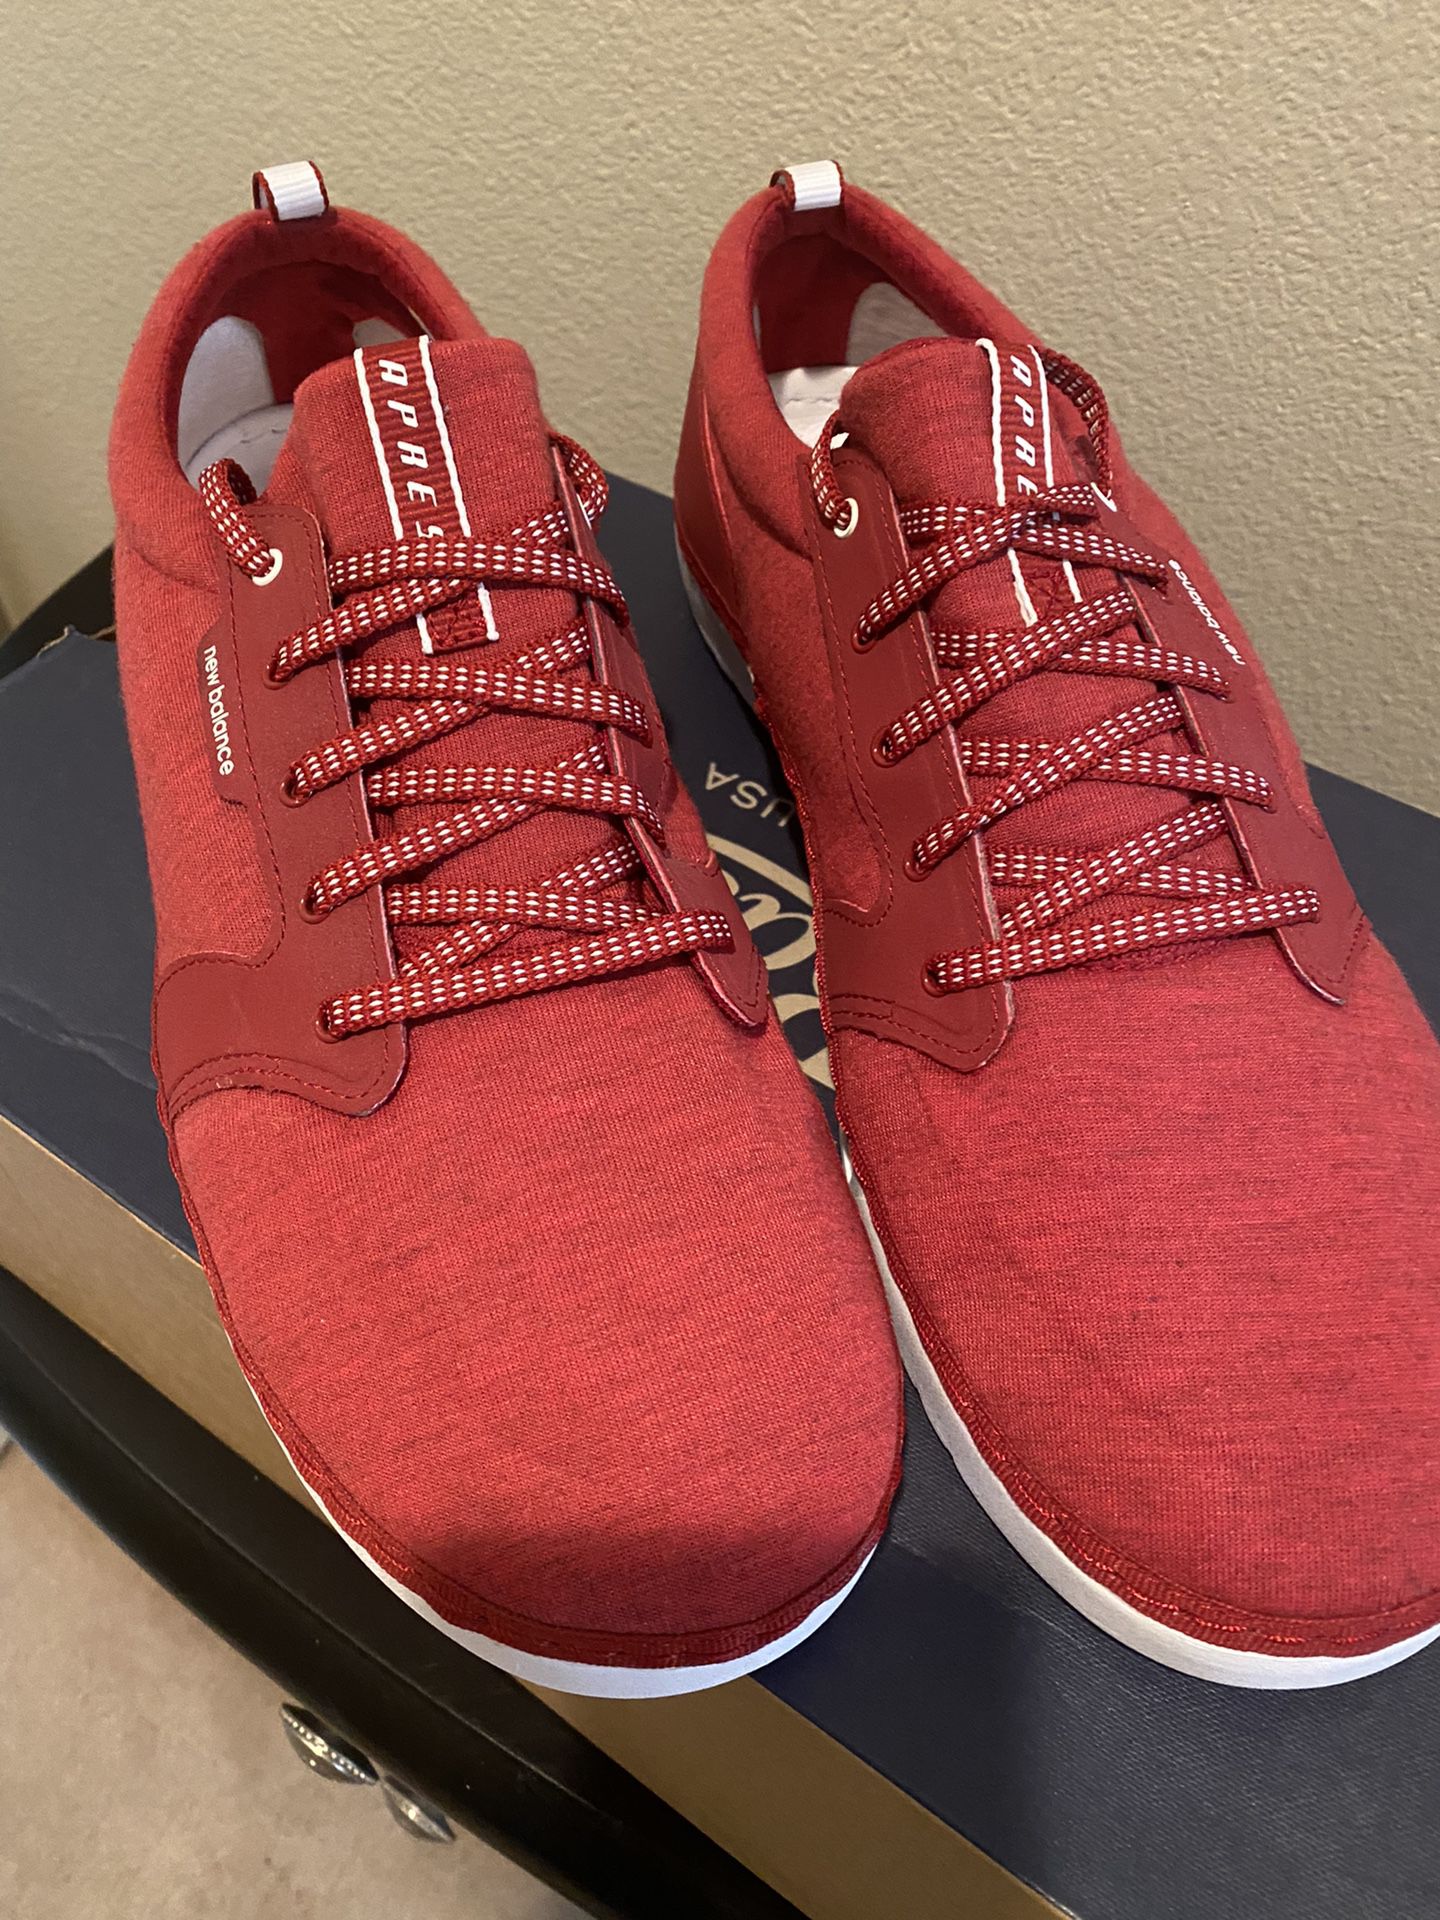 New Balance Apres Men's Shoes- Red Size 13